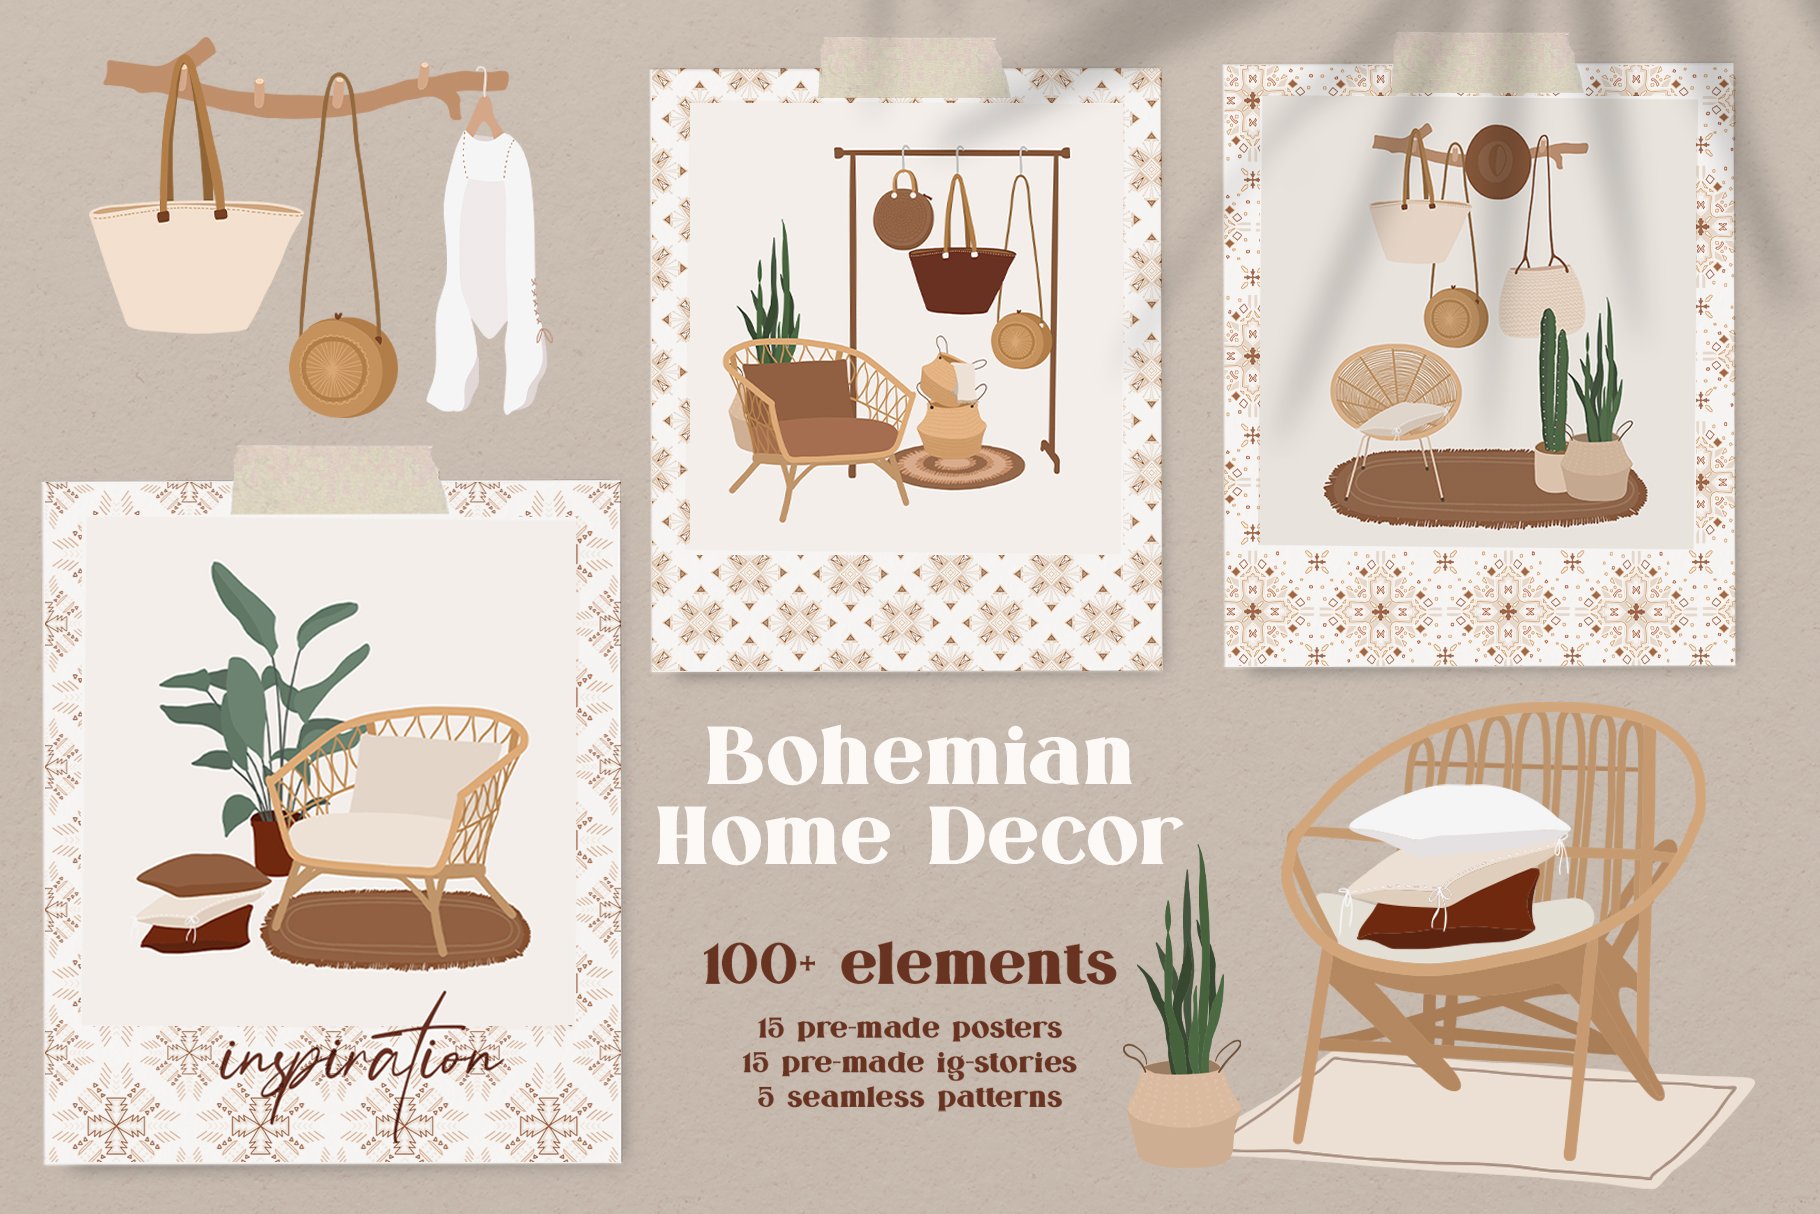 Bohemian Home Decor collection cover image.